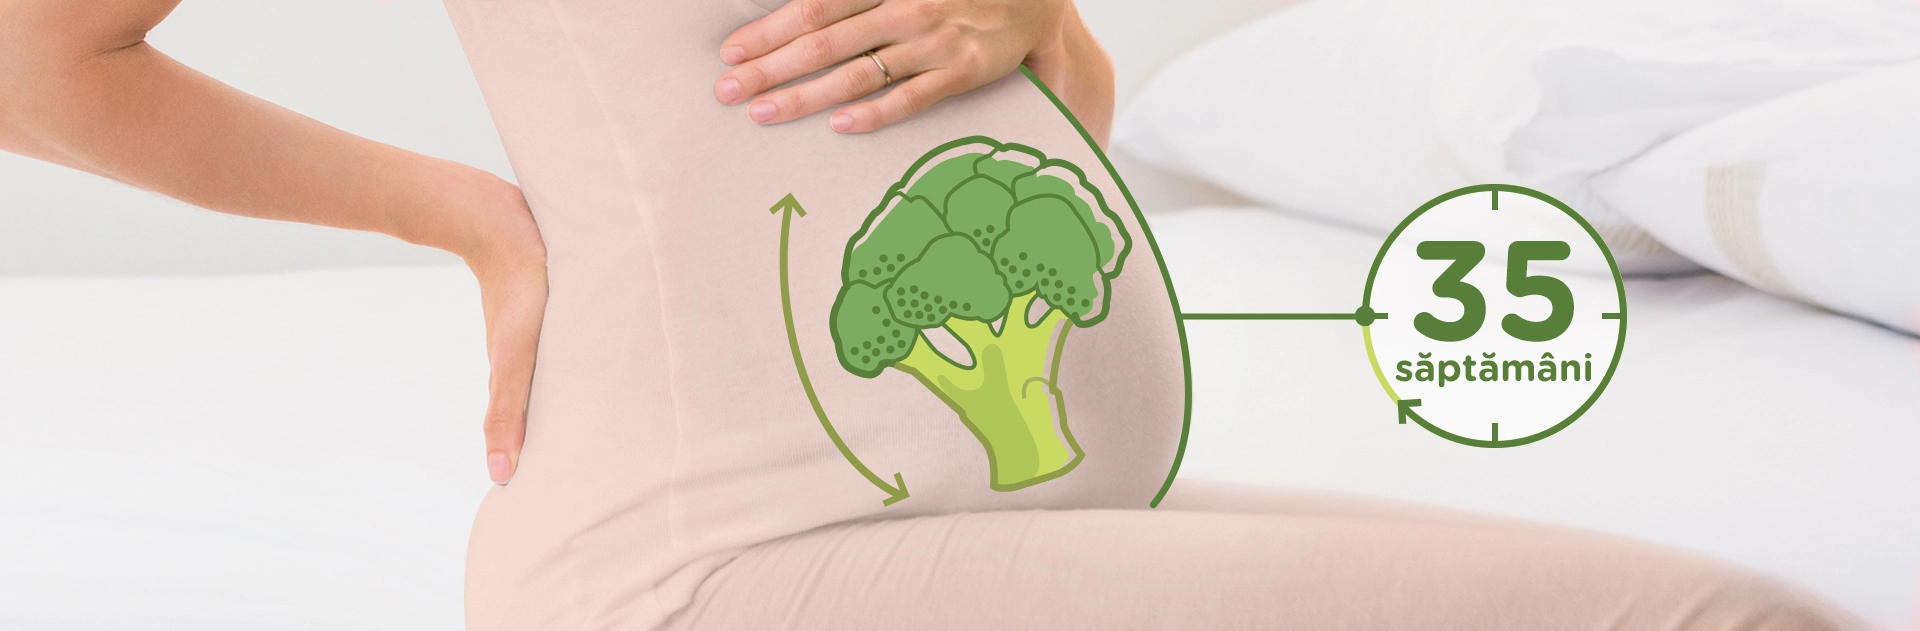 Bebelusul in Saptamana 35 de sarcina fruct: manunchi de broccoli